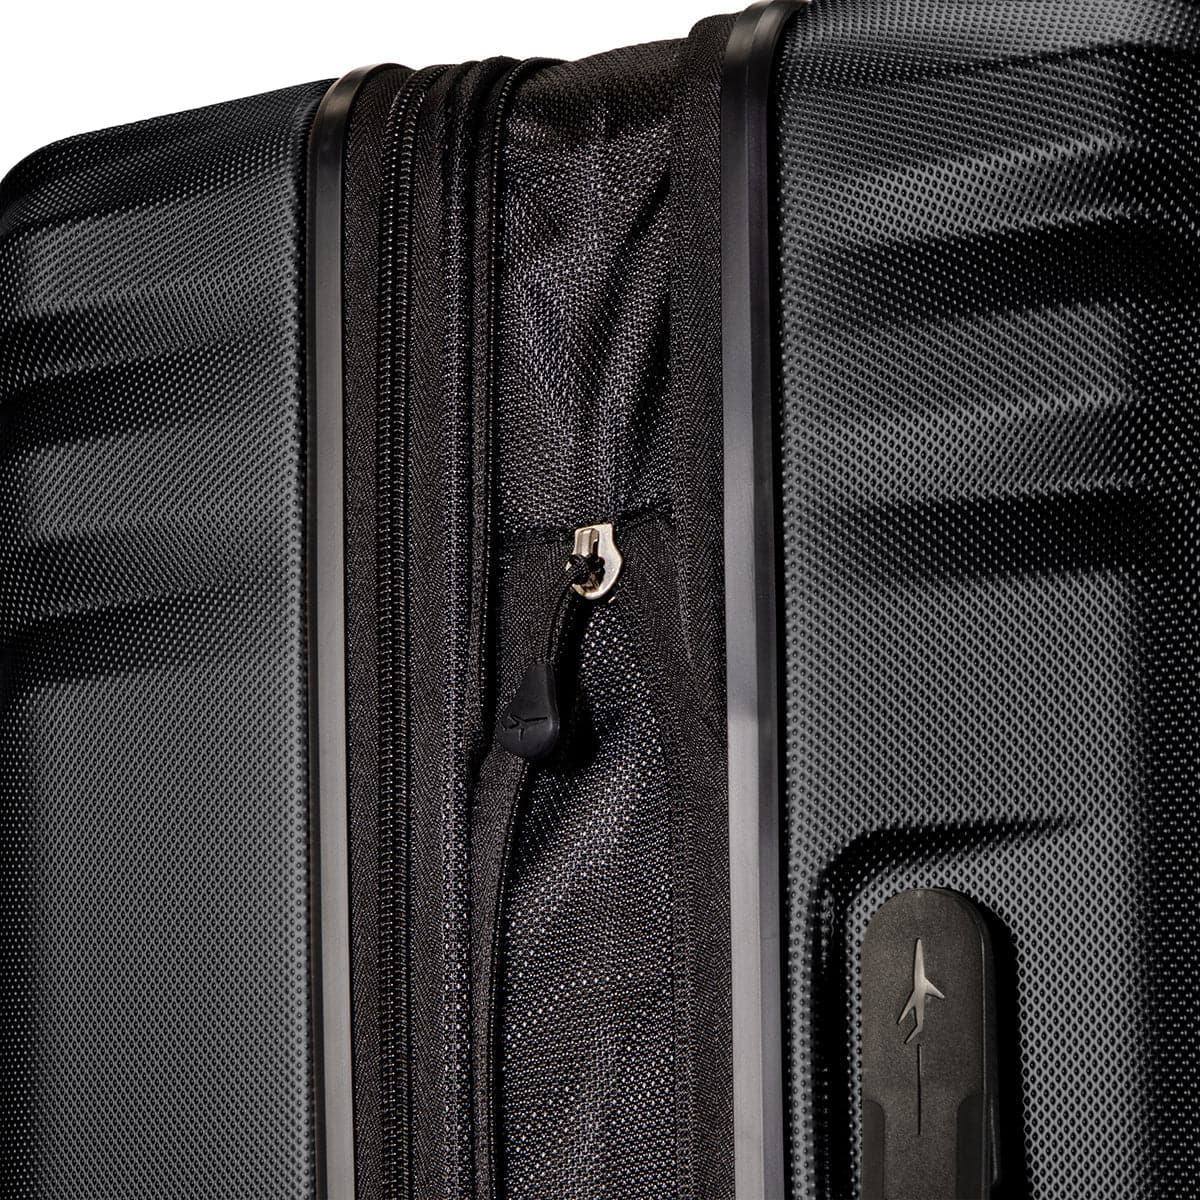 Skyway Nimbus 4.0 Hardside Expandable Spinner Carry-On Luggage